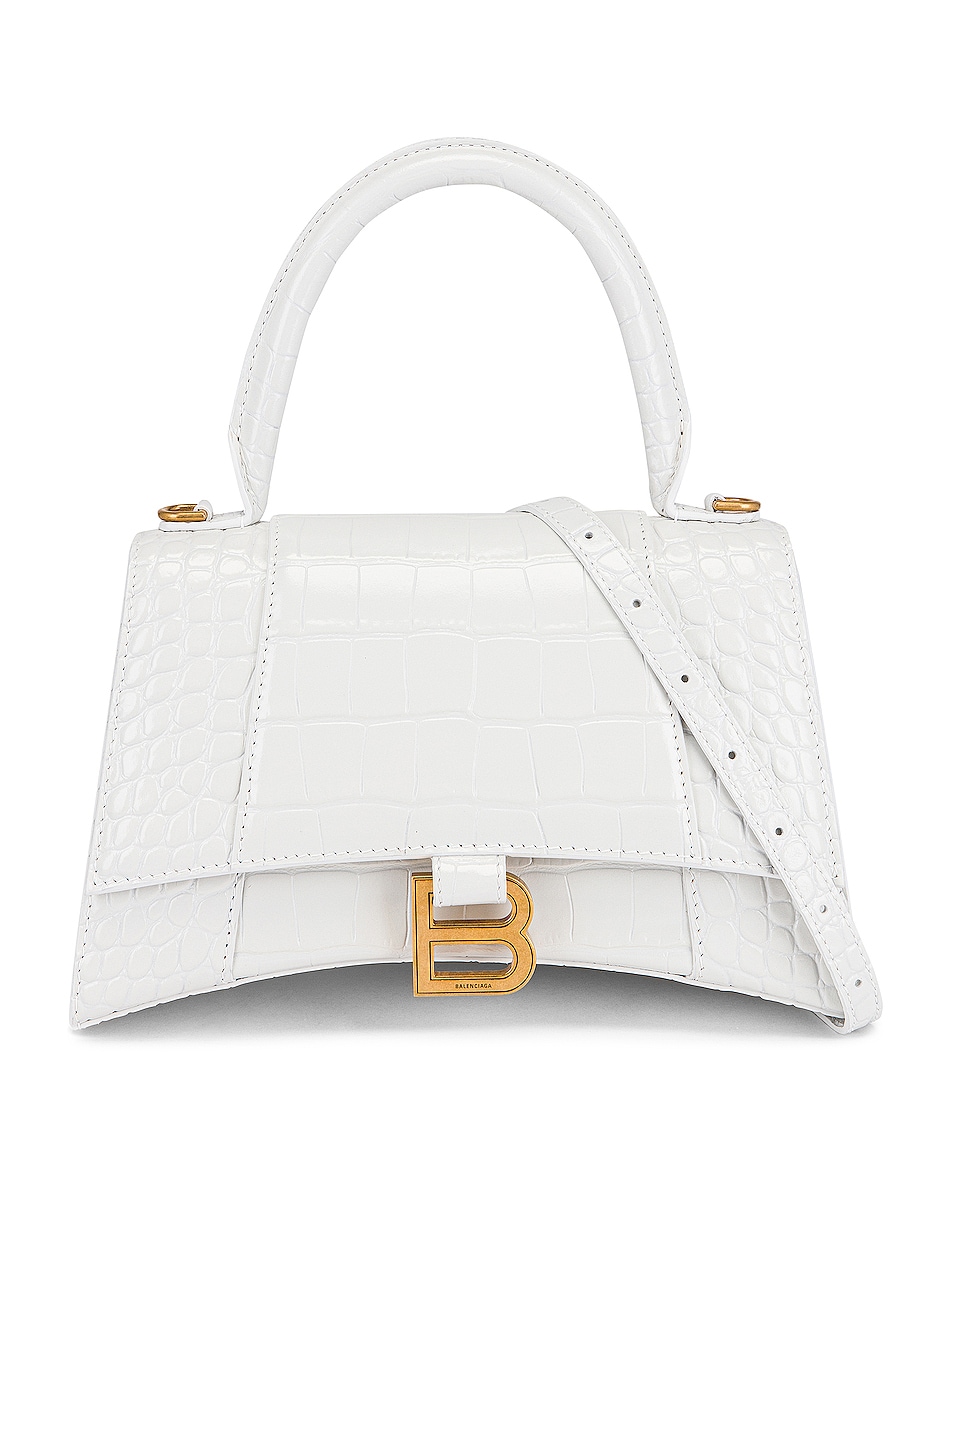 Balenciaga Small Hourglass Top Handle Bag in White